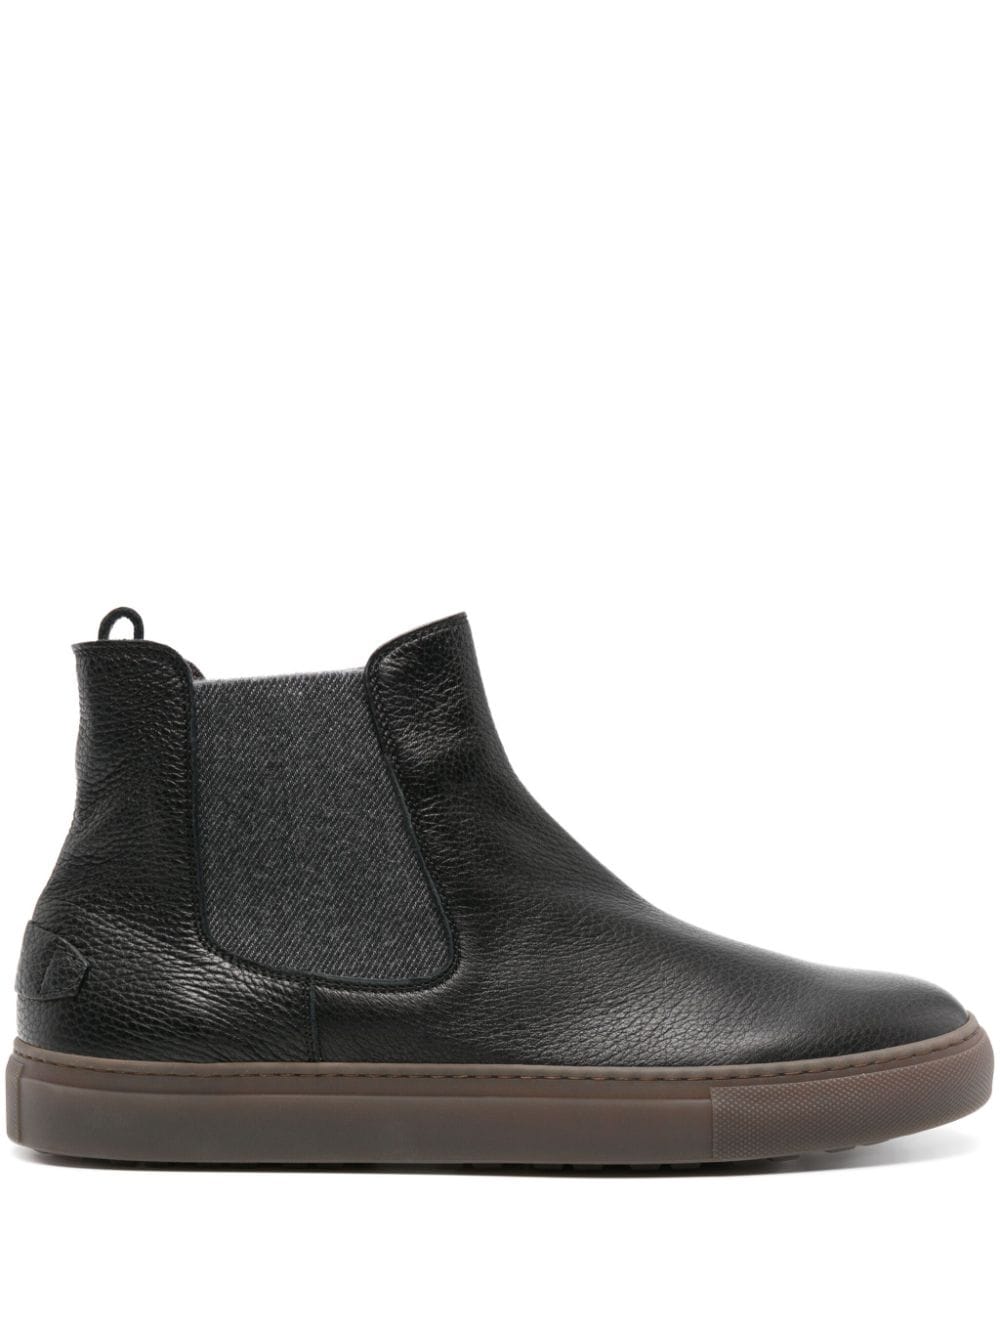 Brioni leather Chelsea boots - Black von Brioni